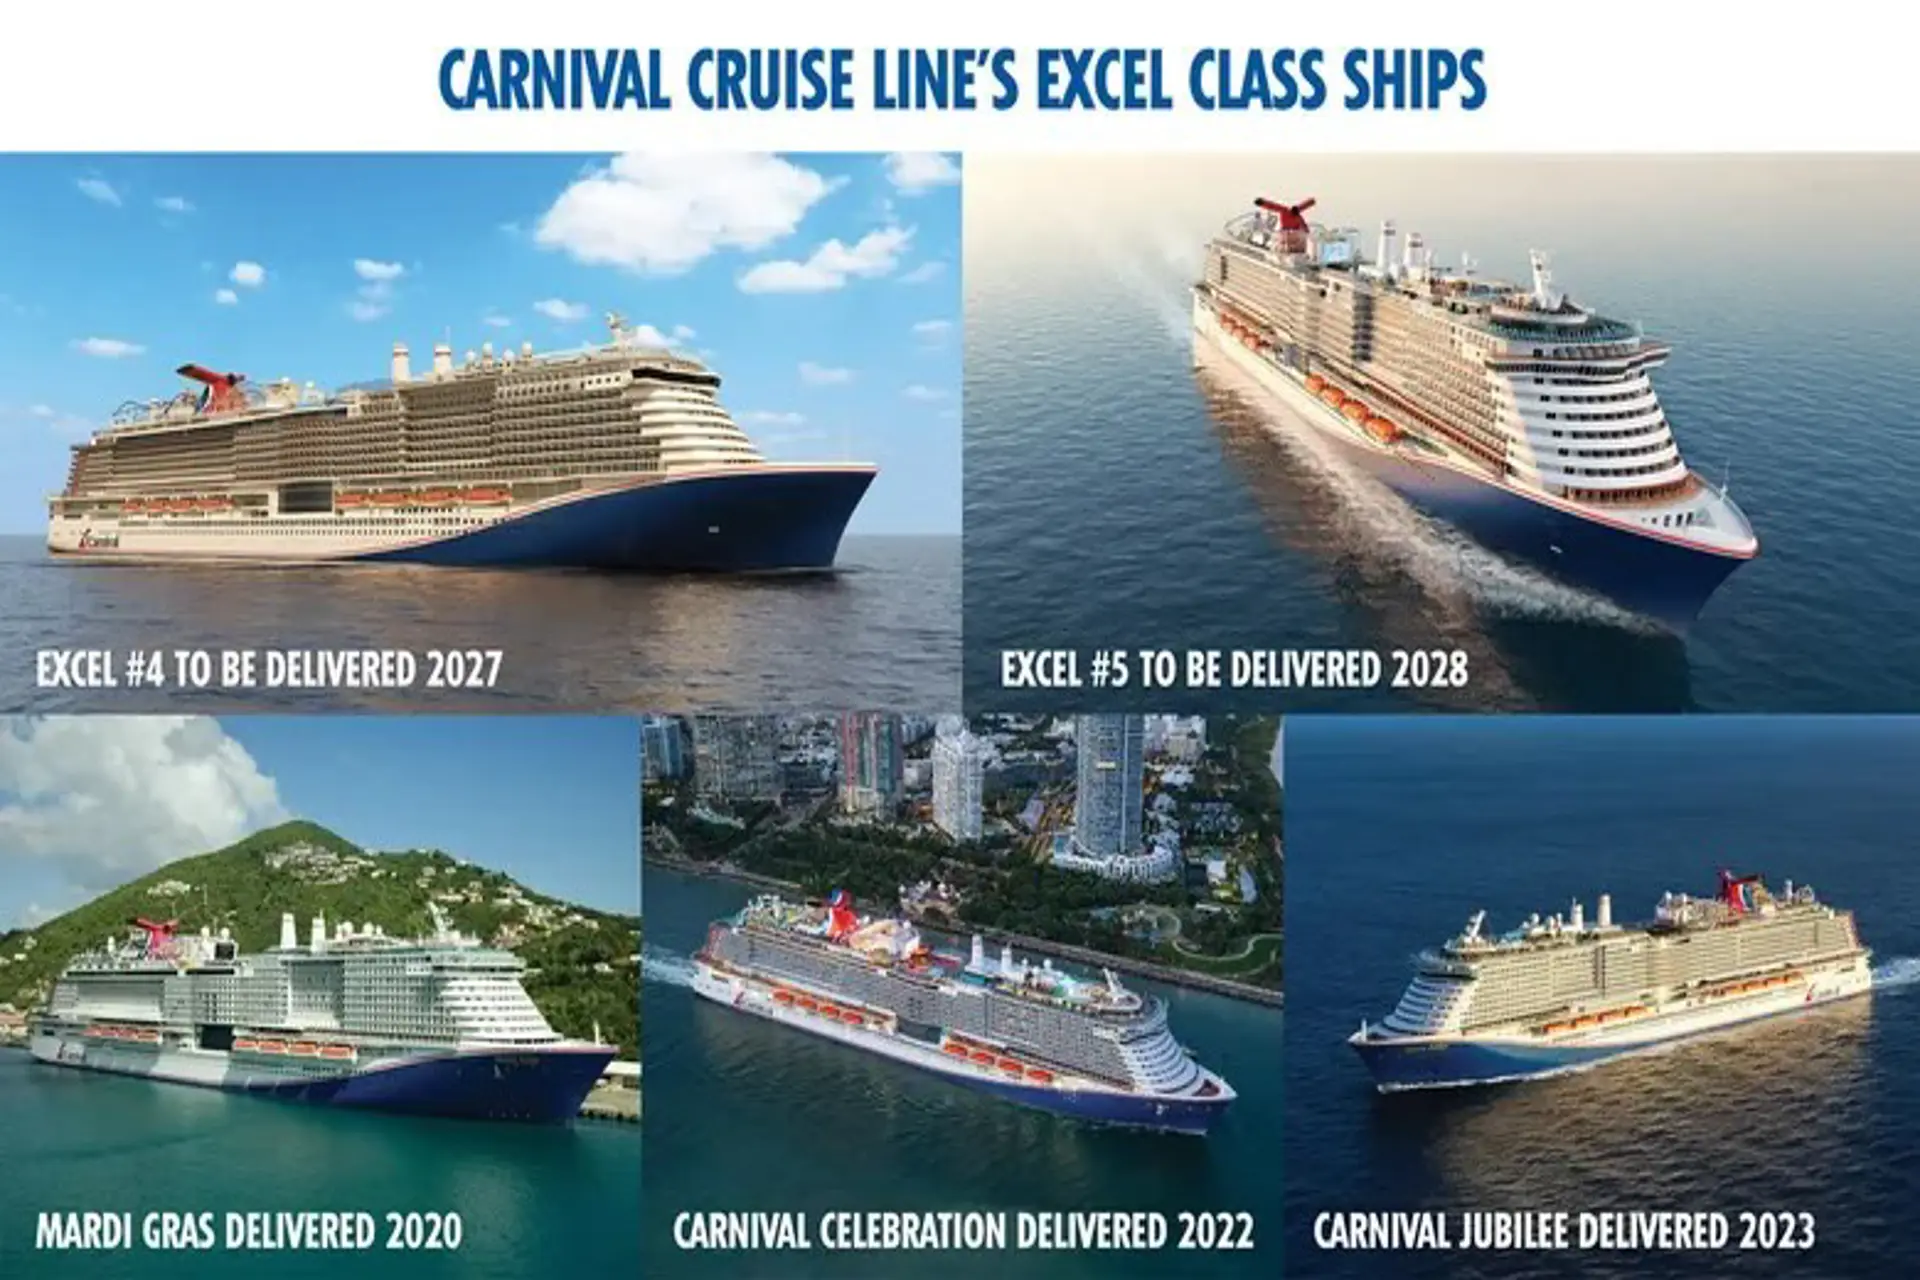 Carnival Cruise Line añade un quinto barco de clase Excel